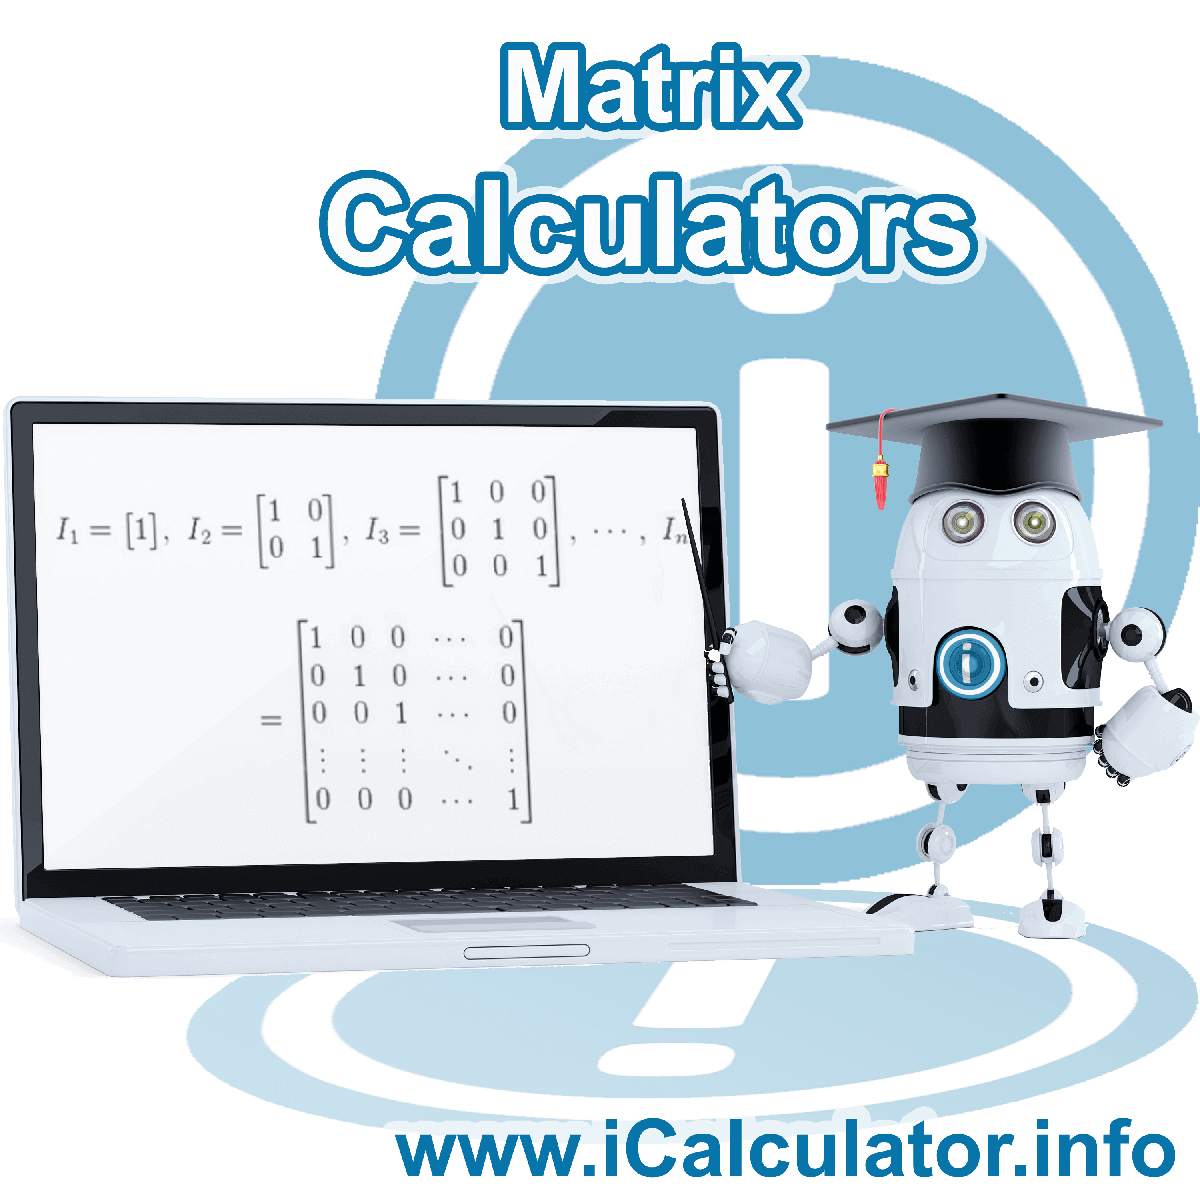 Matrix Calculators. This image shows the mathMatrix formula for the matrix formuals used in the Matrix Calculators on iCalculator